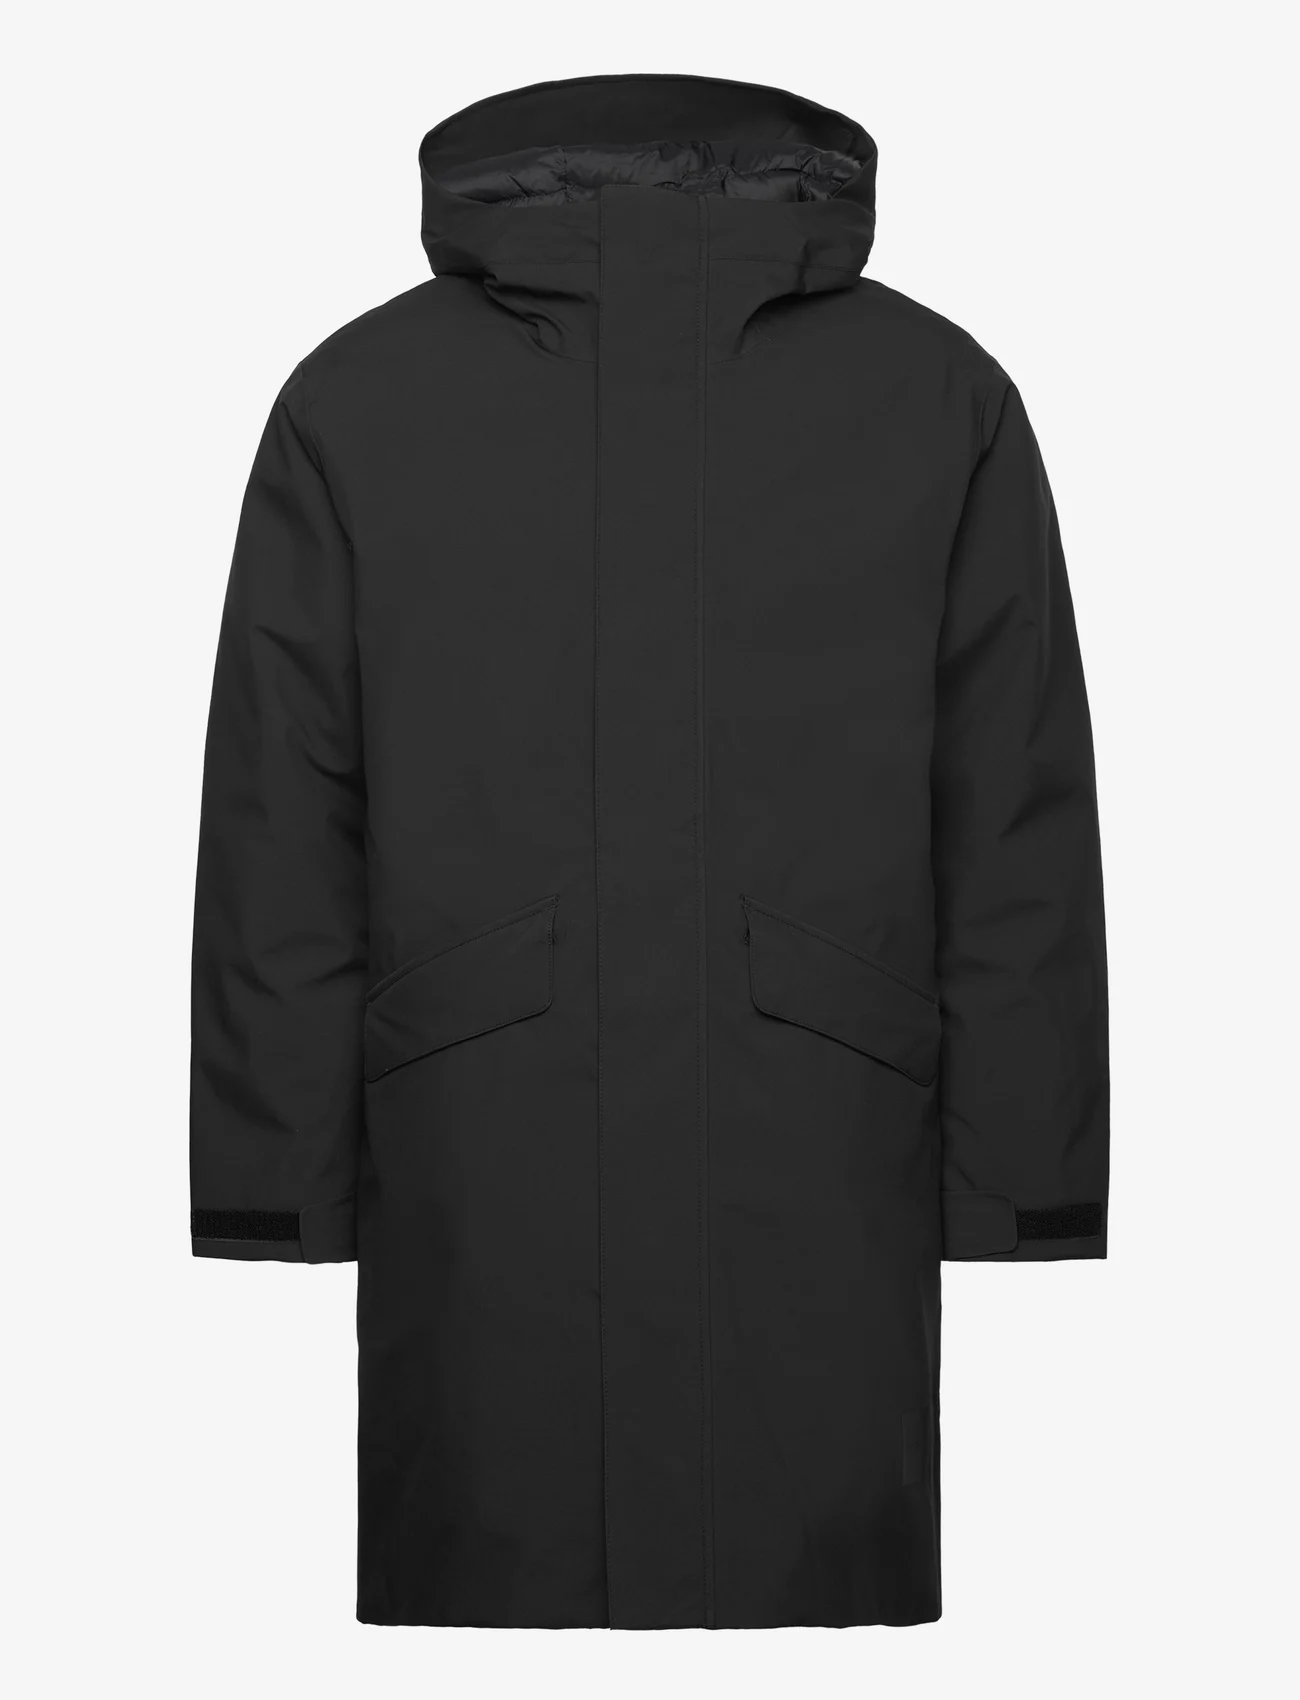 Makia - Ultima Jacket - winter jackets - black - 0